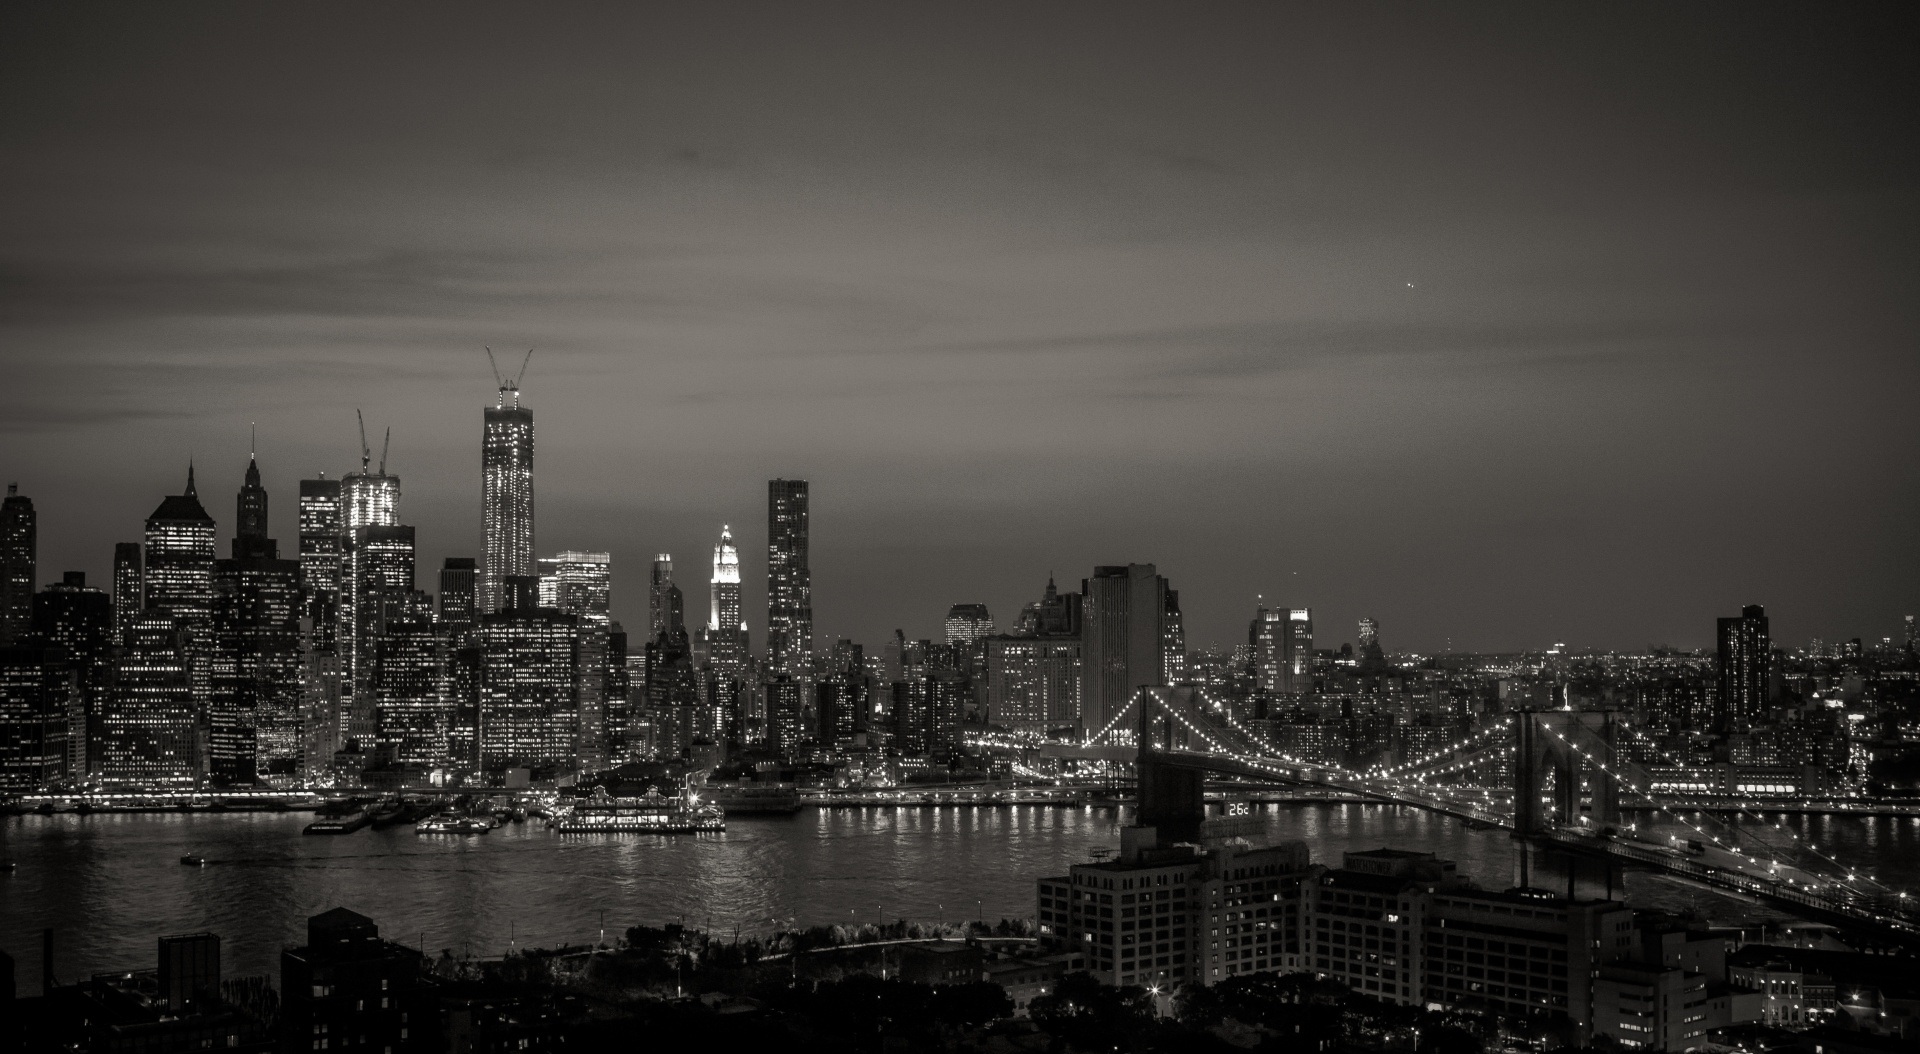 NewYork city at Night